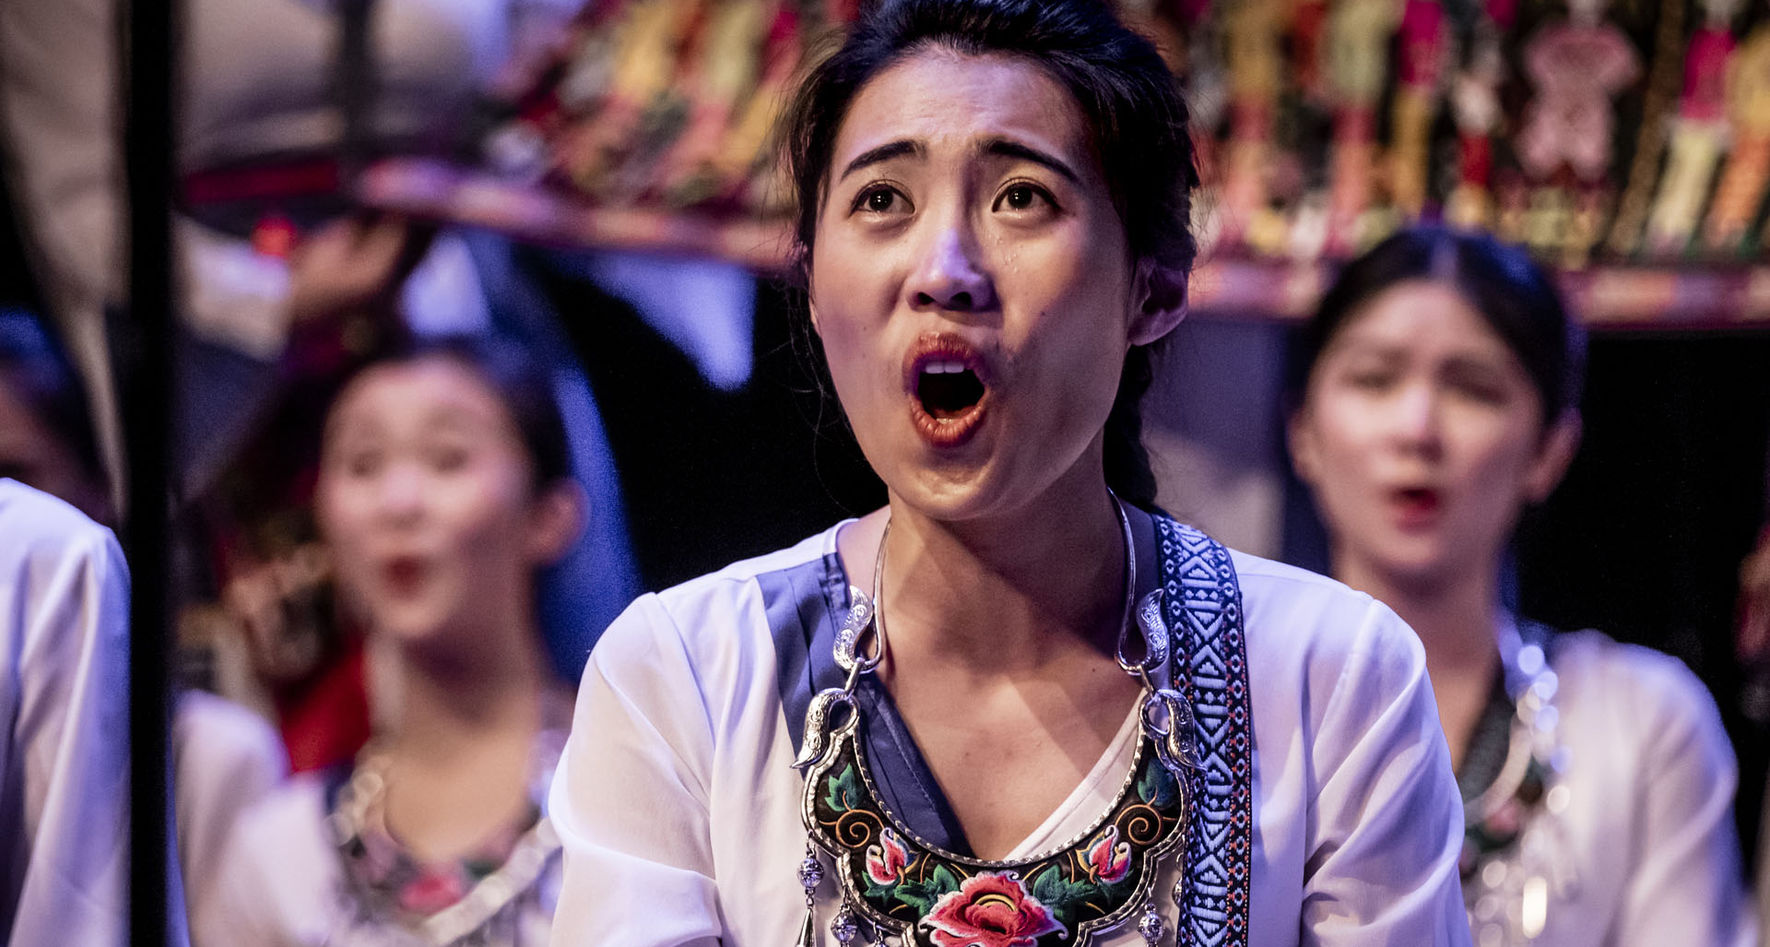 South China Normal University Female Choir / China © Jonas Persson 